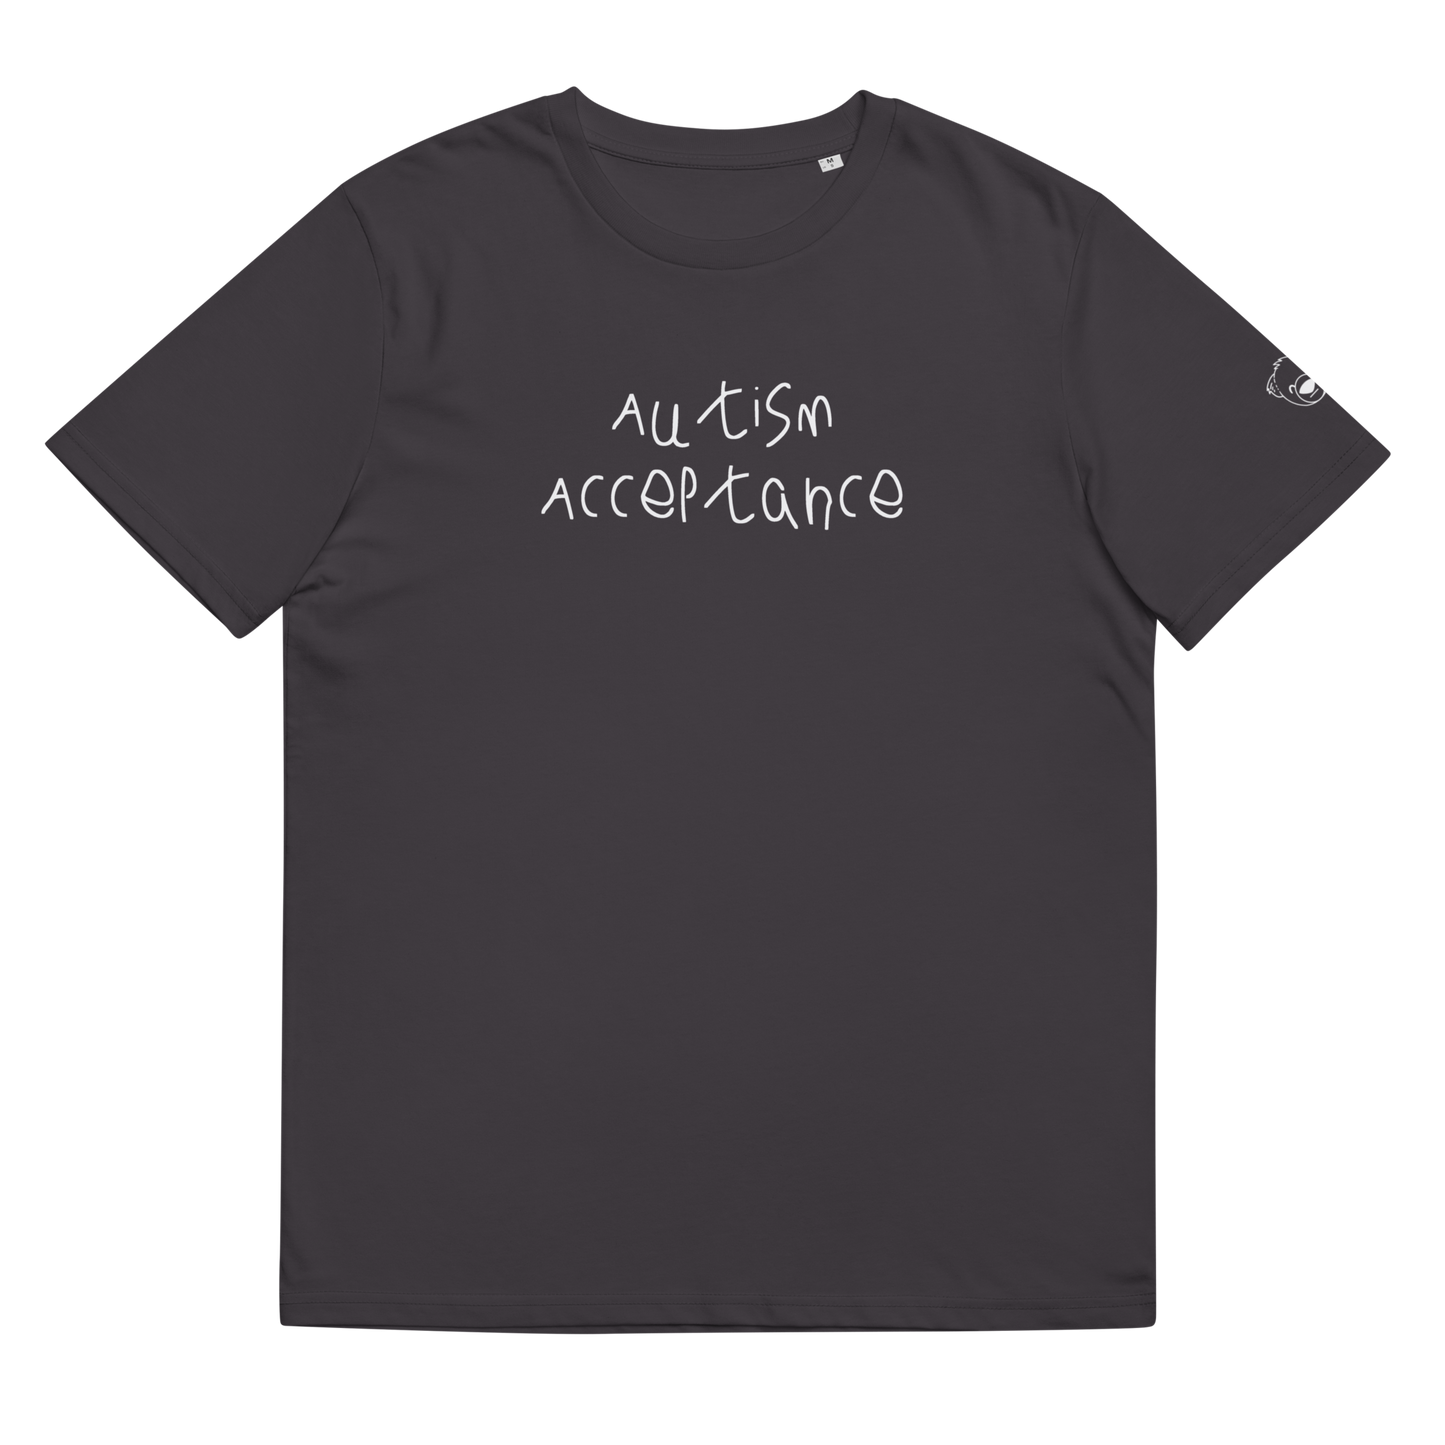 Autism Acceptance Shirt (Anthracite)